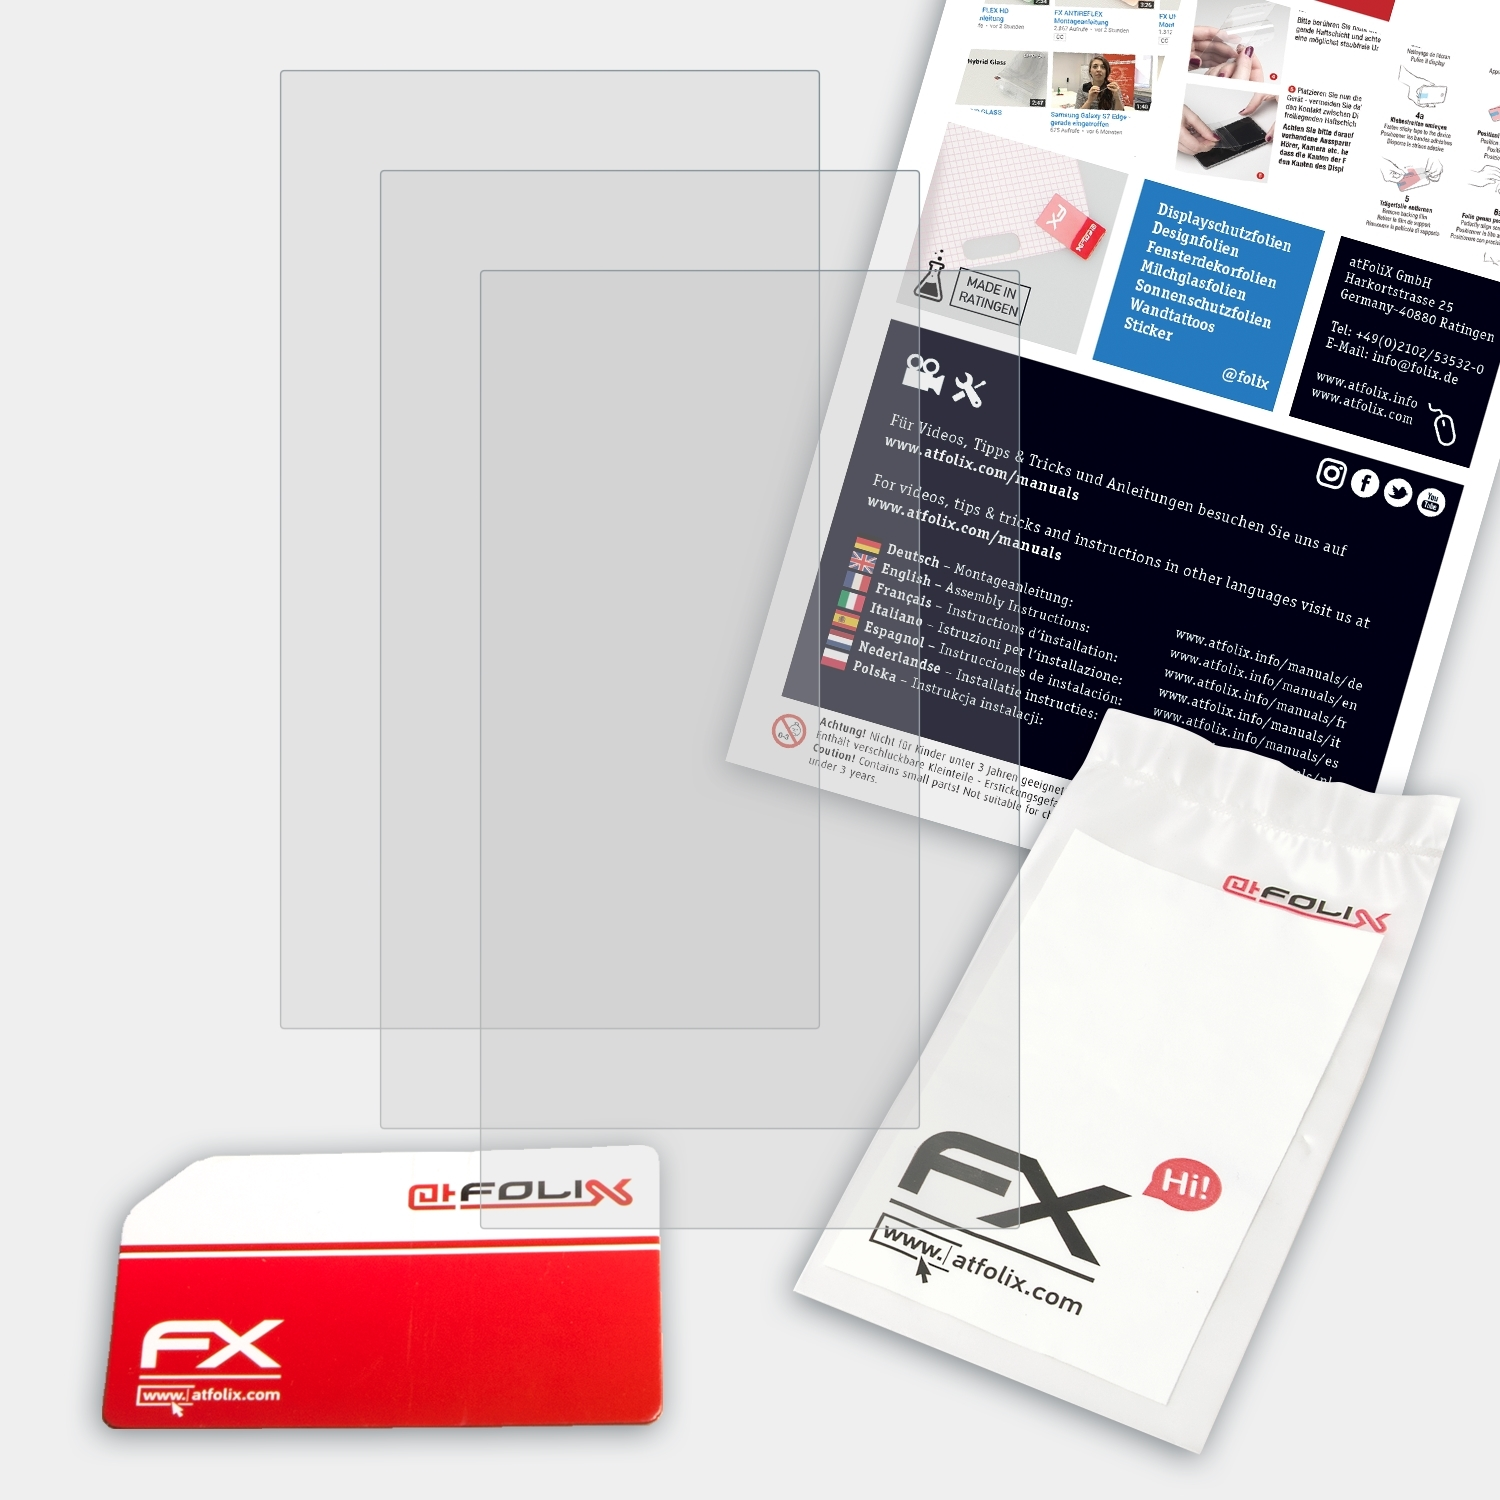 ATFOLIX FX-Antireflex Displayschutz(für XM-VRSUA737) Xomax 3x